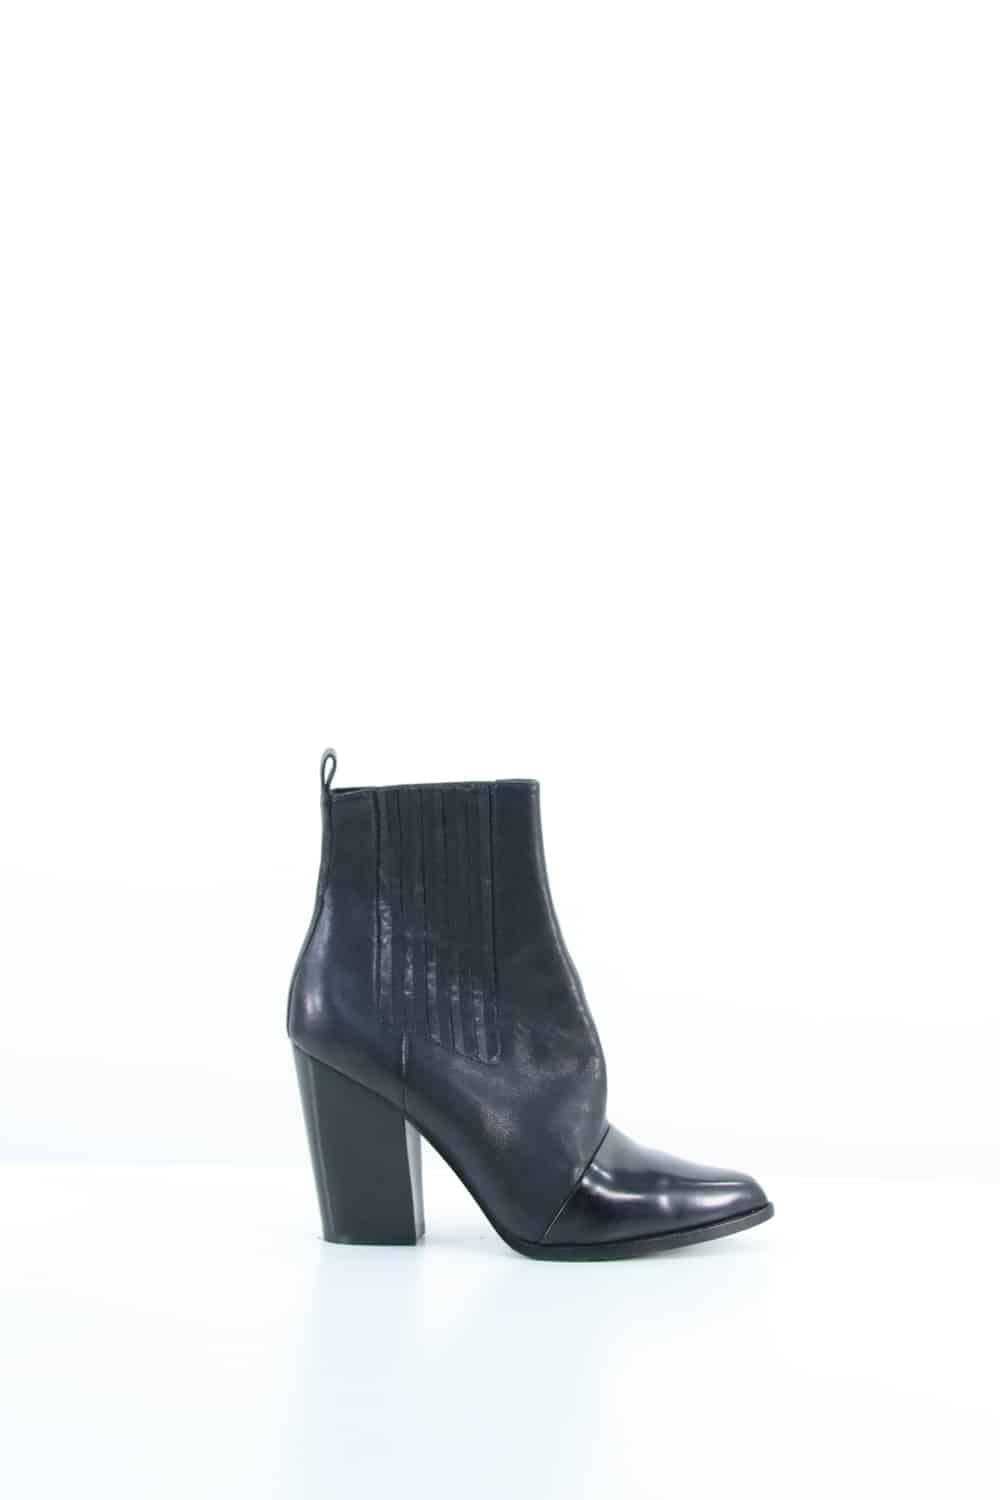 Circular Clothing Boots Kenzo noir cuir. Talon 9.… - image 1